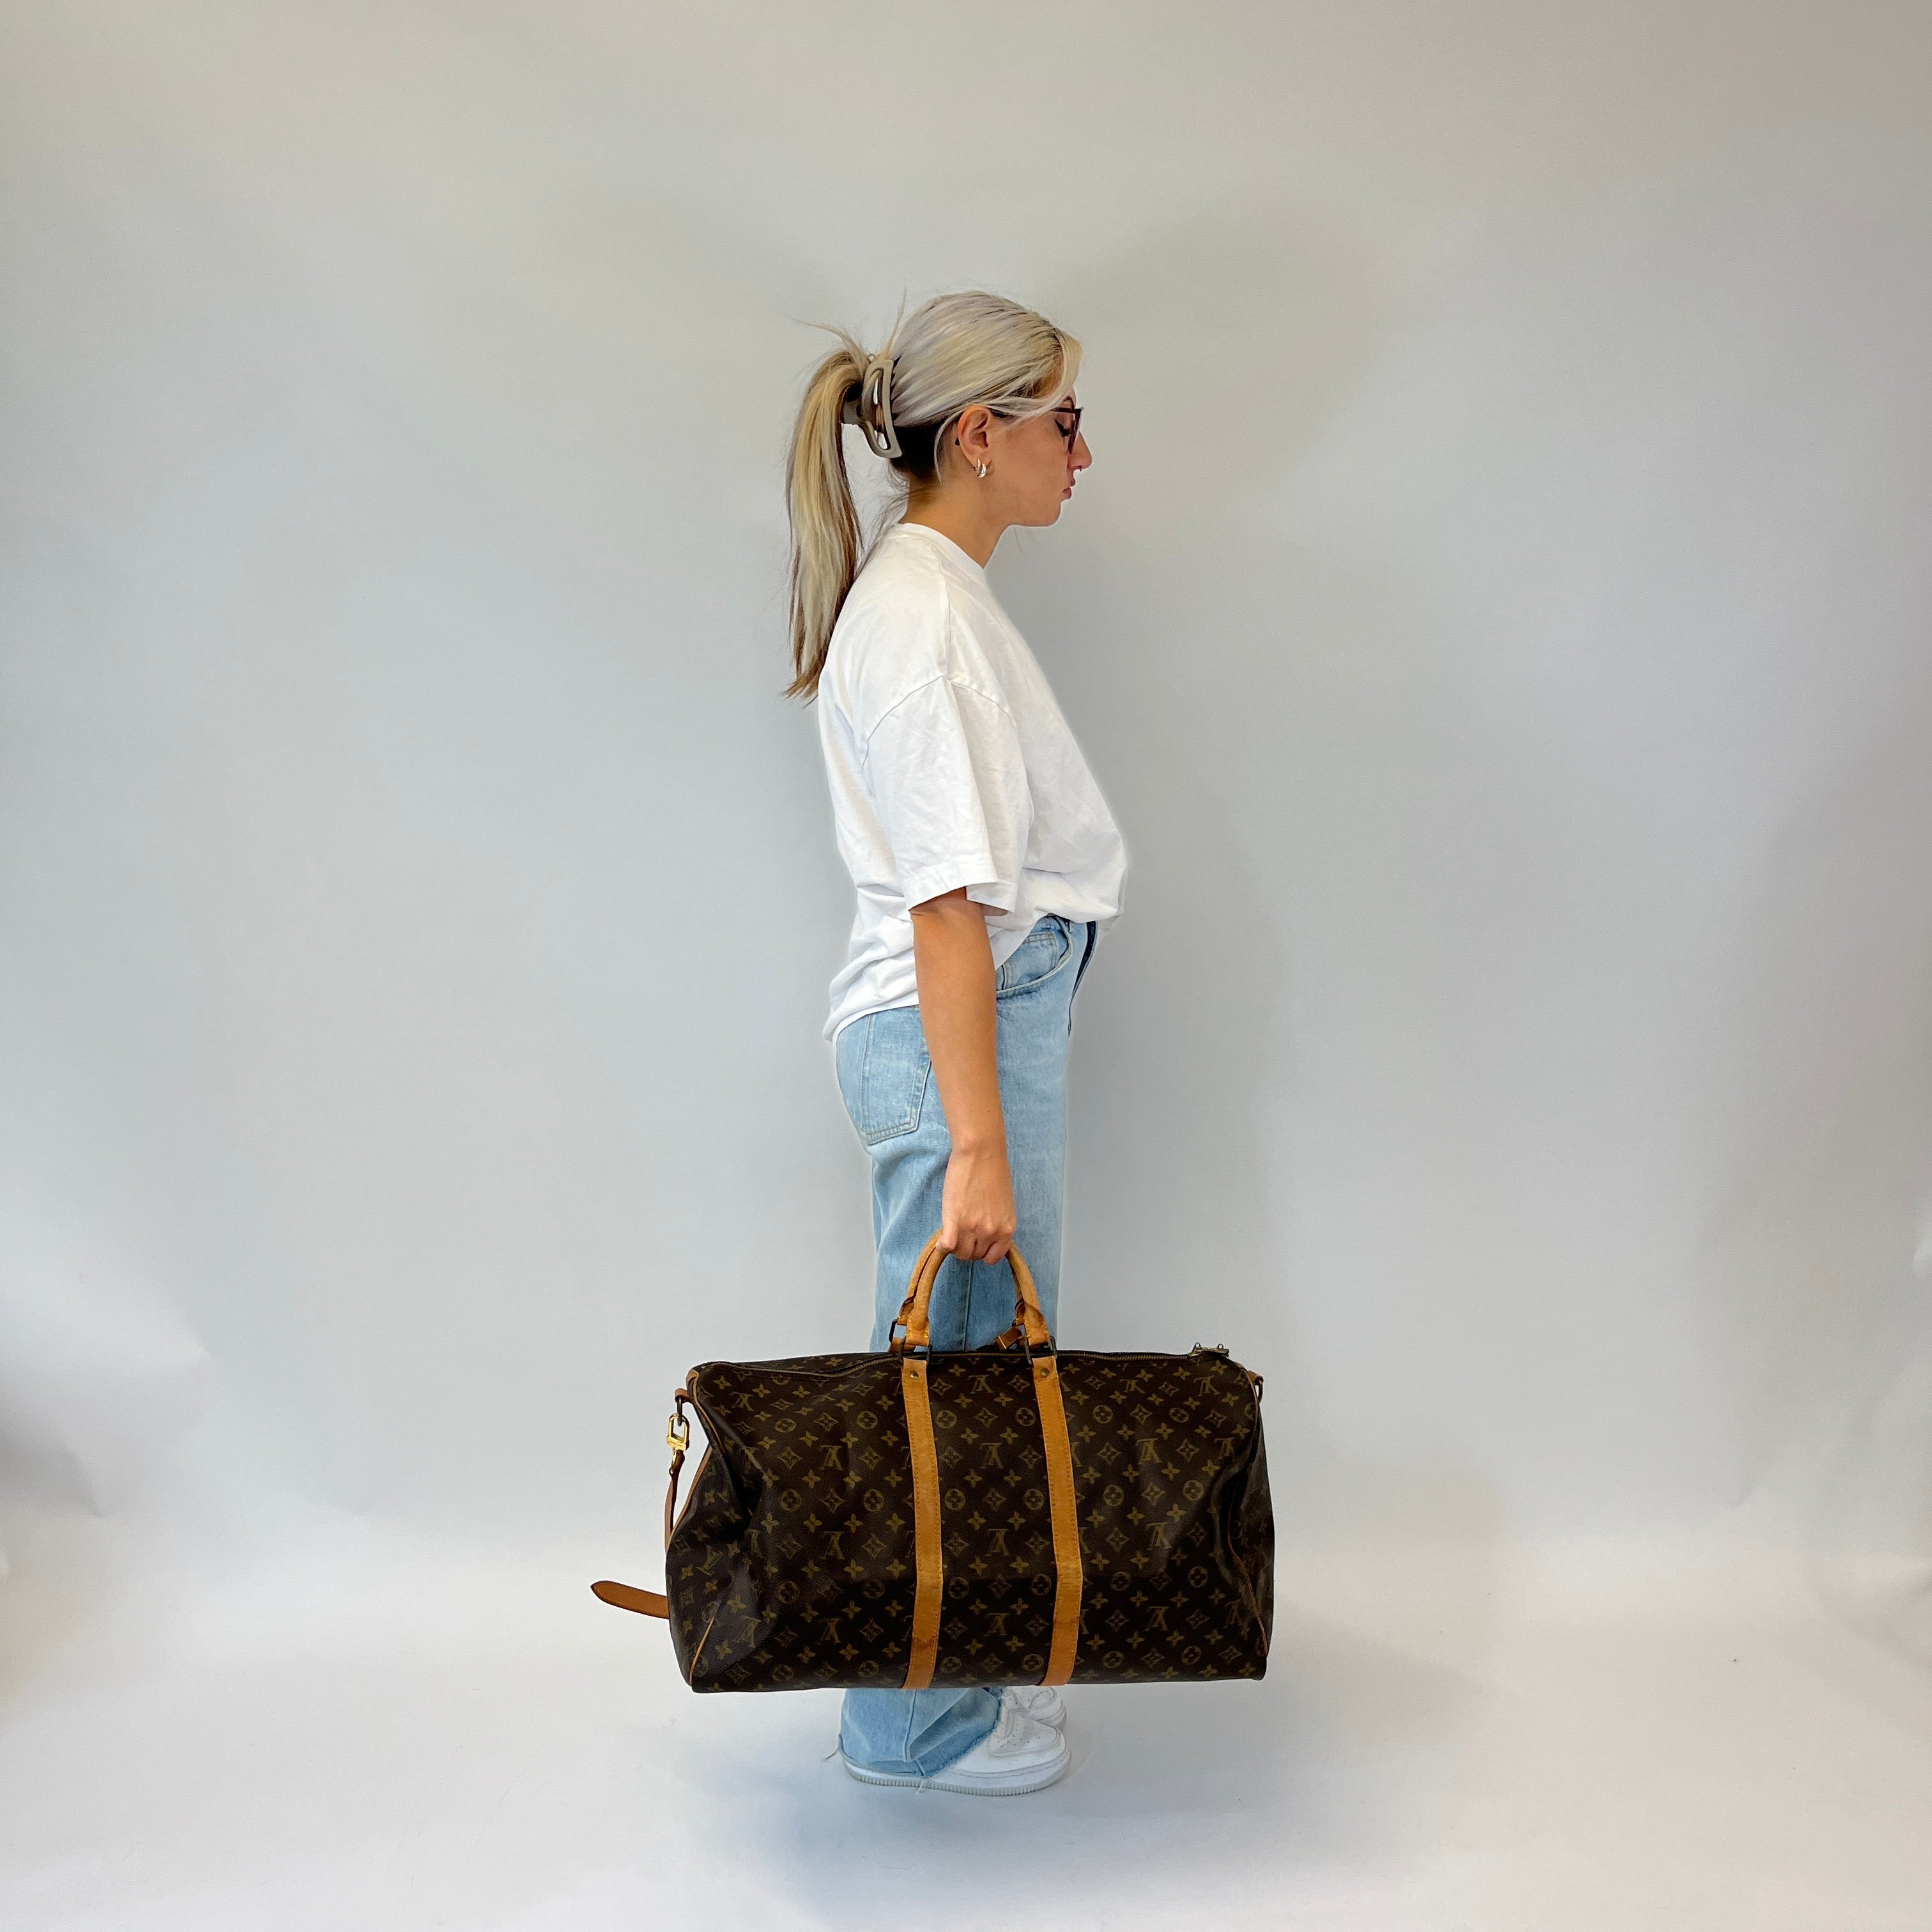 Louis Vuitton Keepall / travel bag 60 with shoulder strap monogram brown